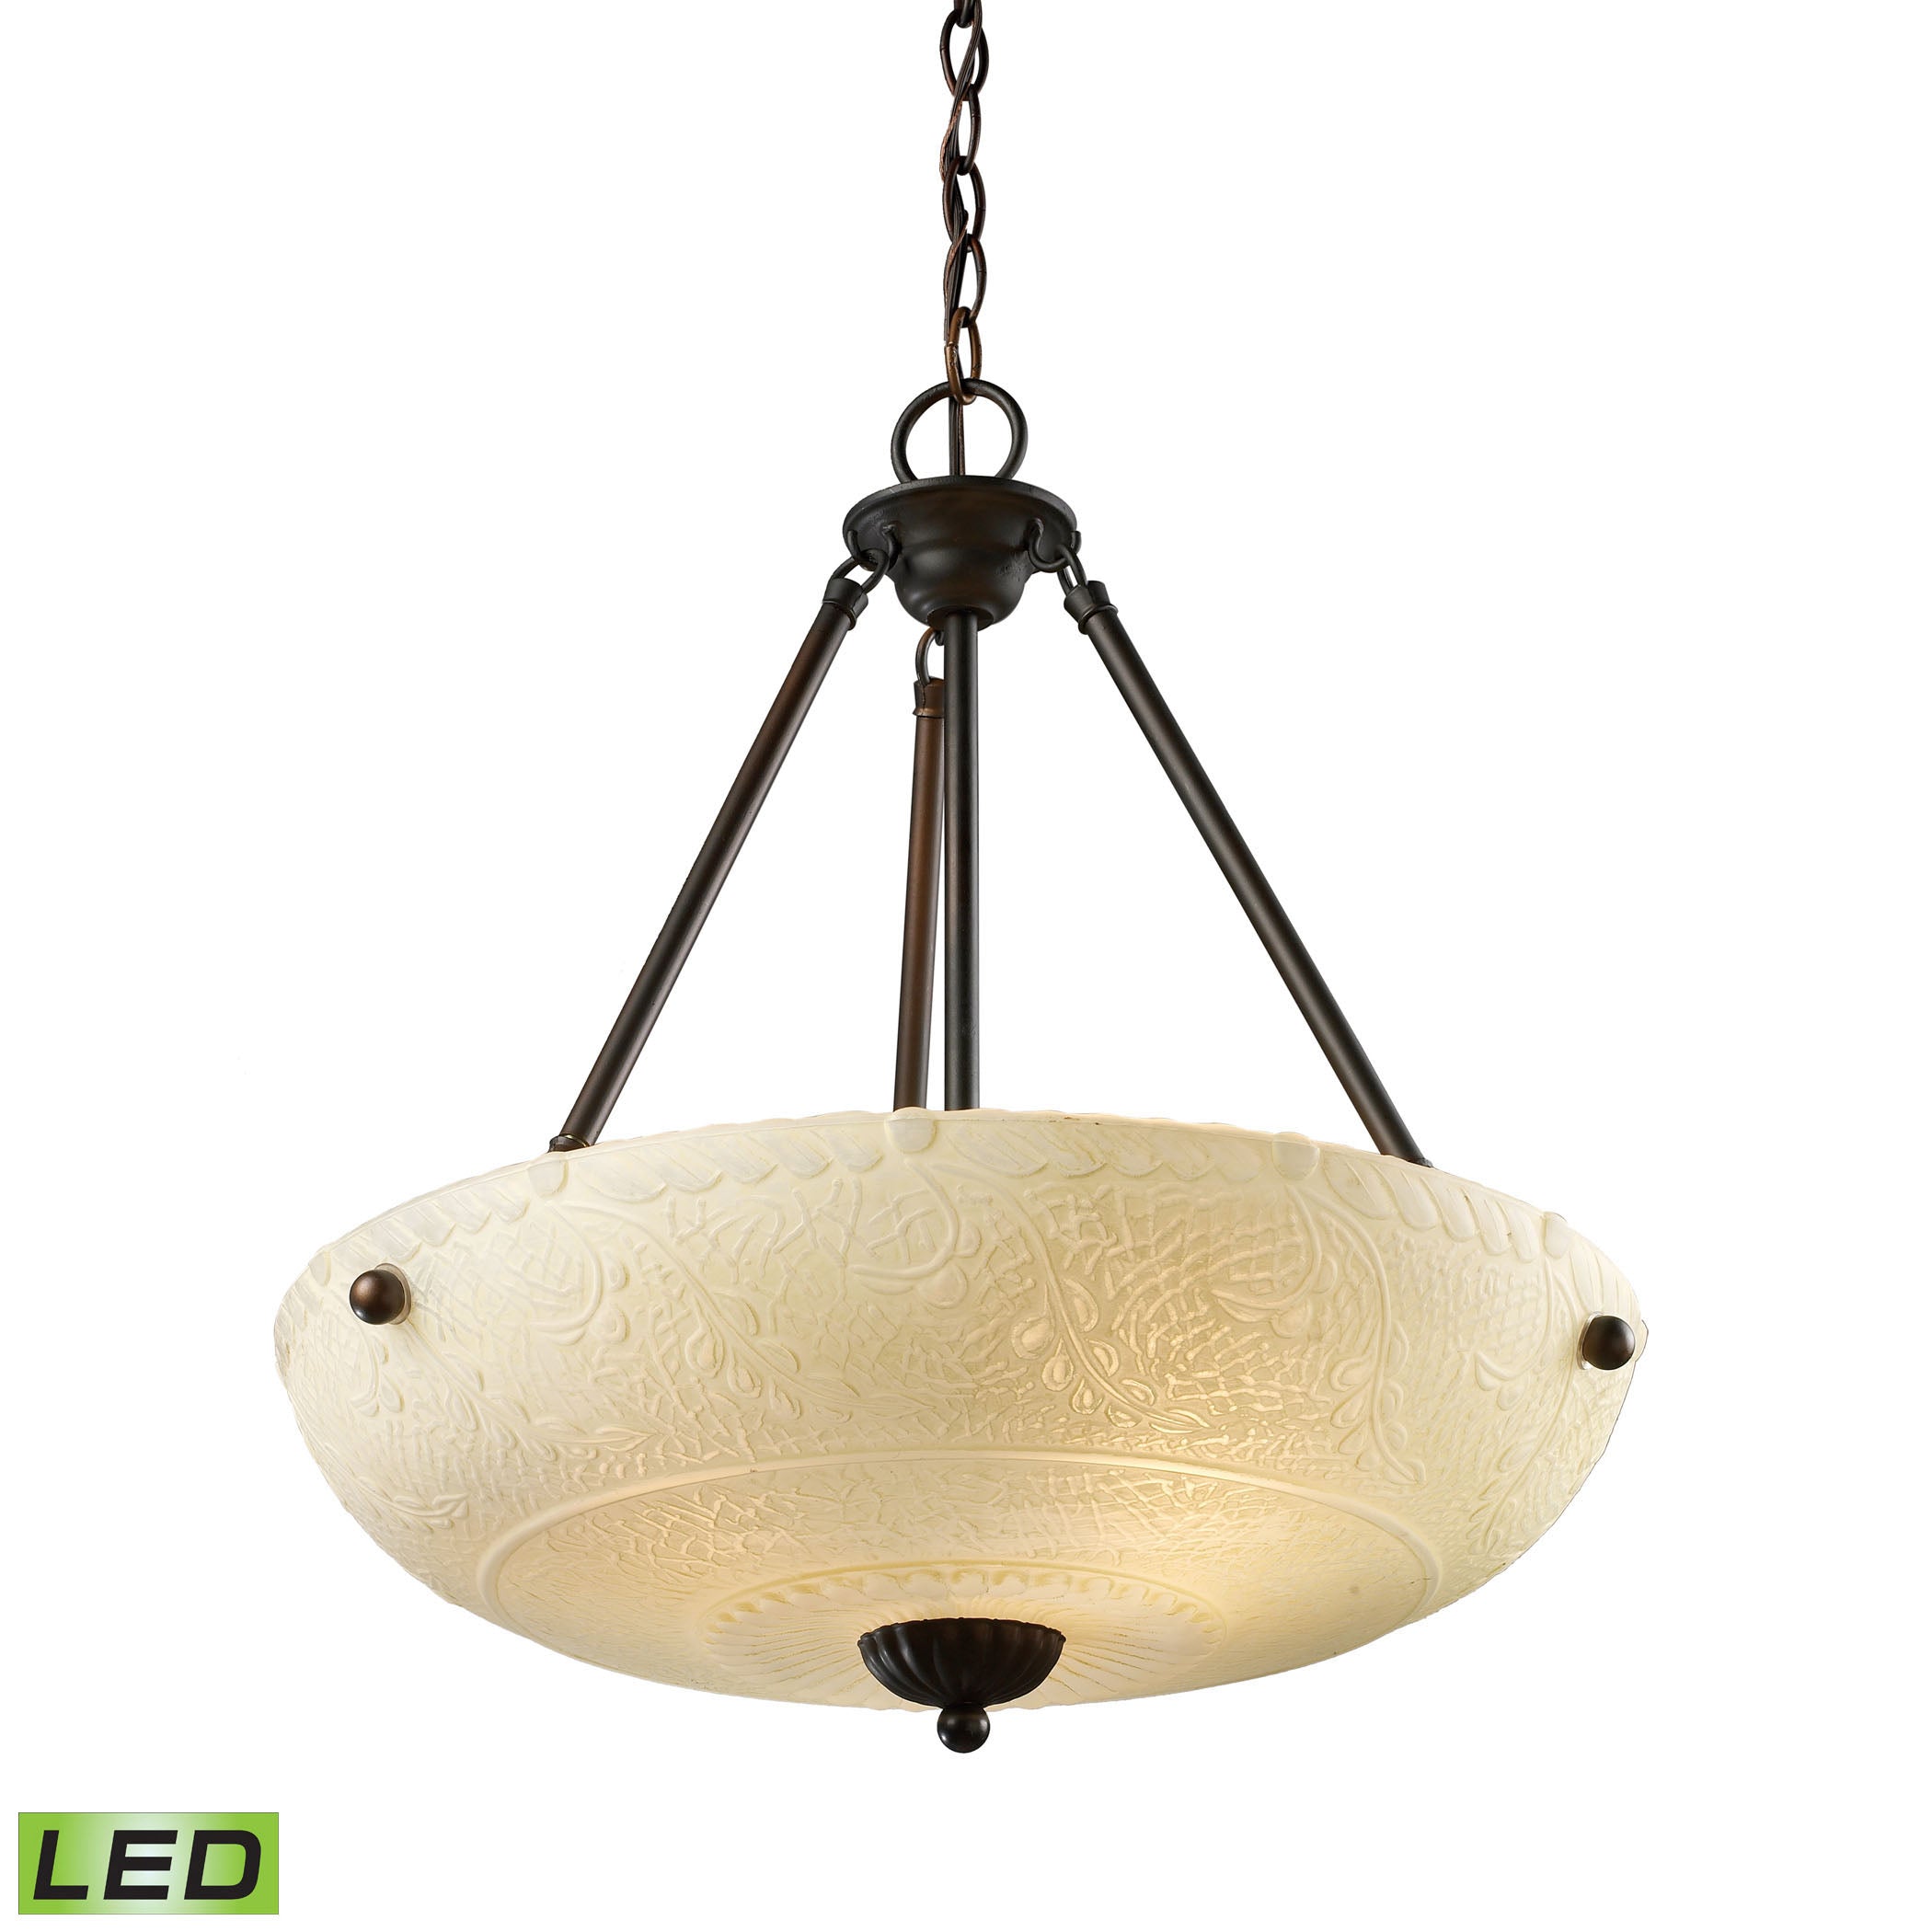 ELK Lighting 66322-4-LED Restoration 4-Light Pendant in Aged Bronze with White Glass - Includes LED Bulbs